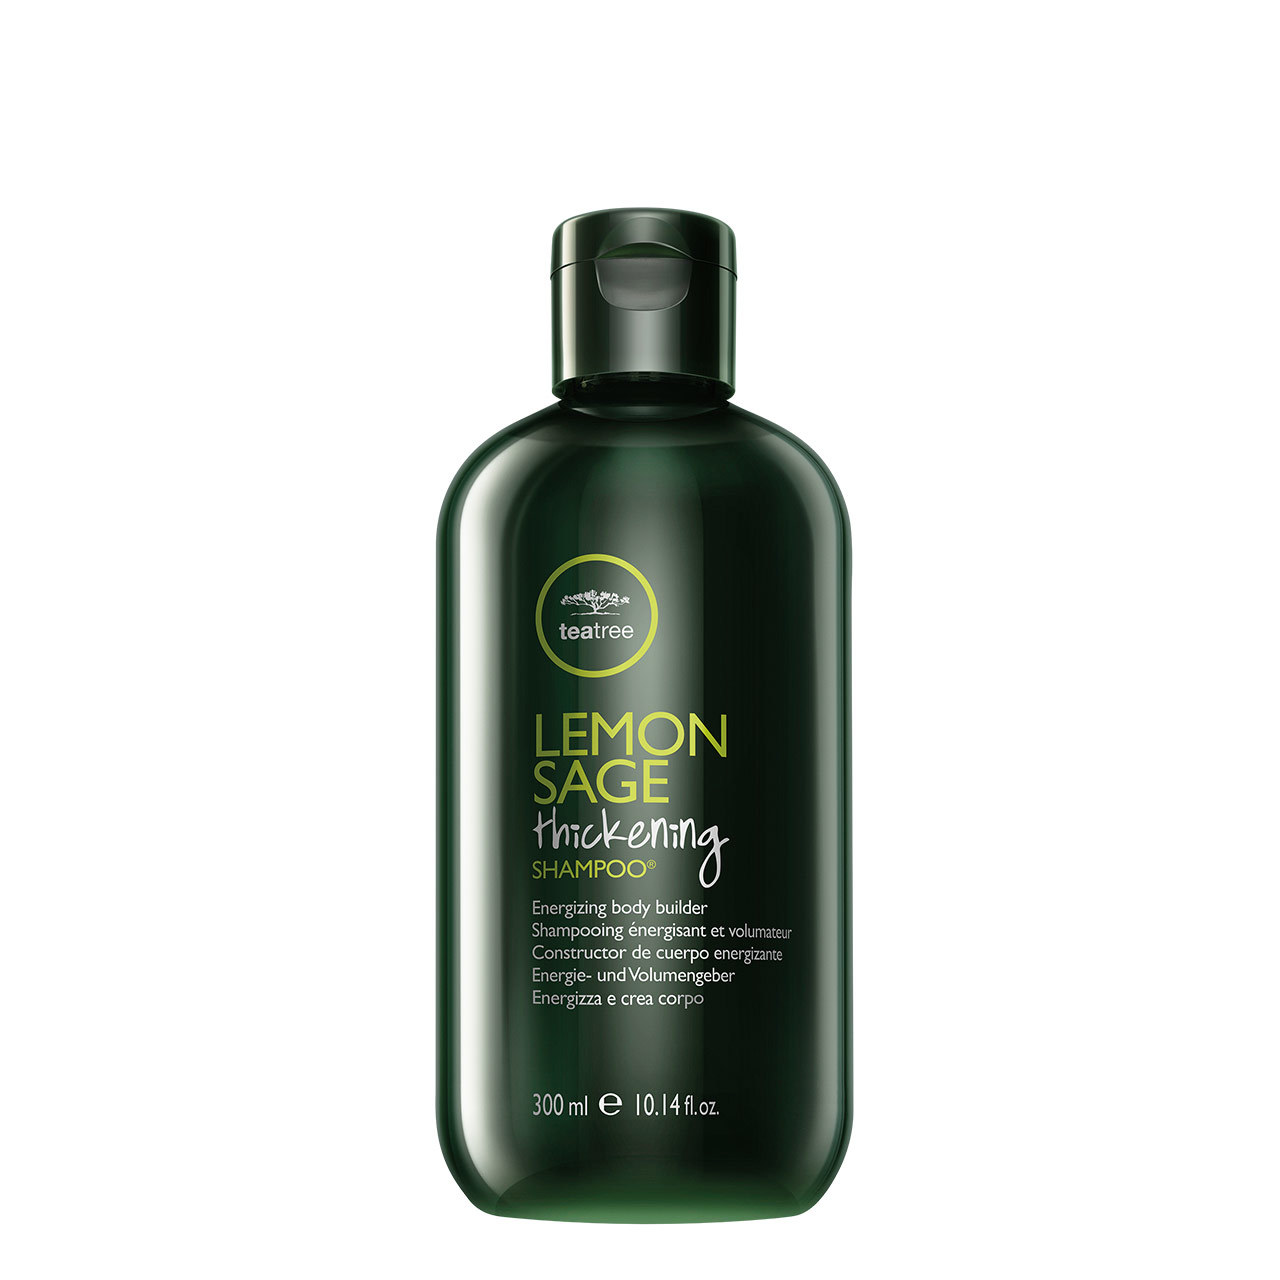 Lemon Sage Thickening Shampoo® obsah (ml): 300ml